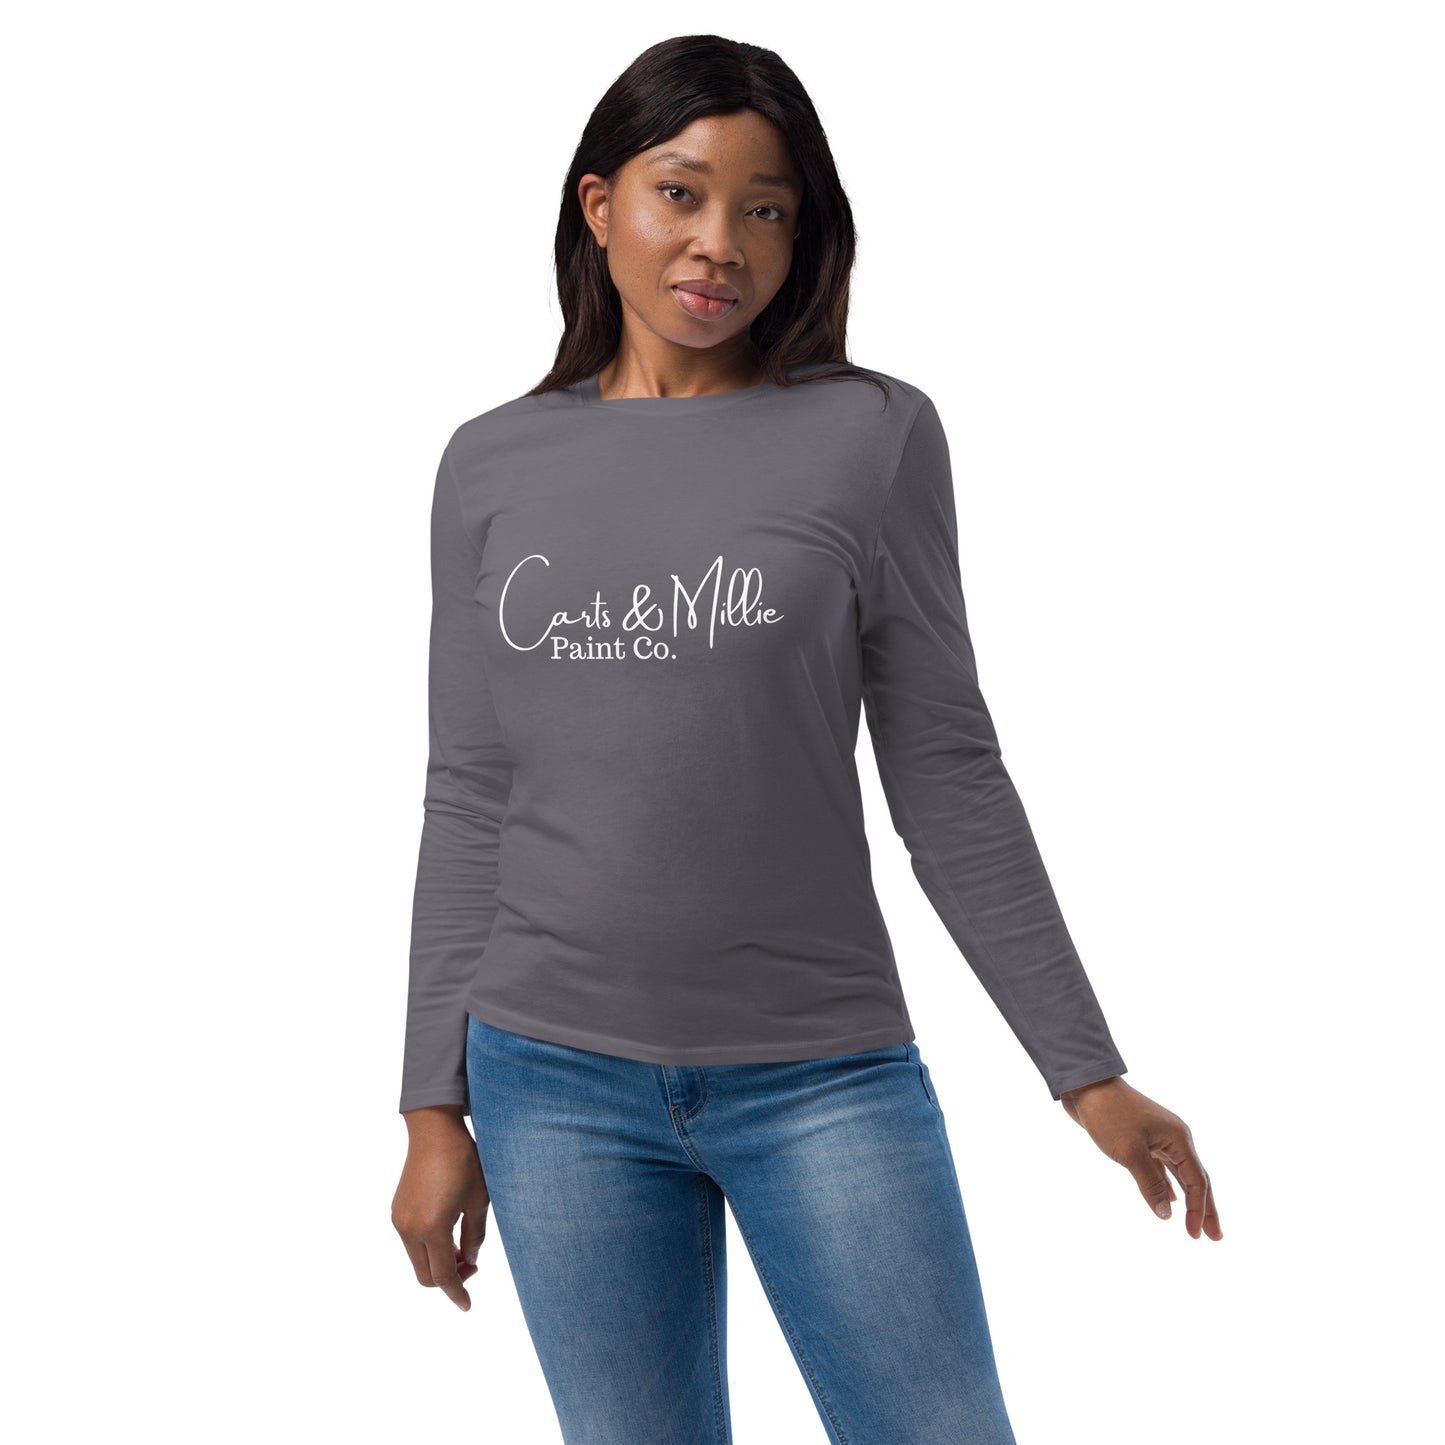 Carts & Millie Paint Co. Unisex fashion long sleeve shirt